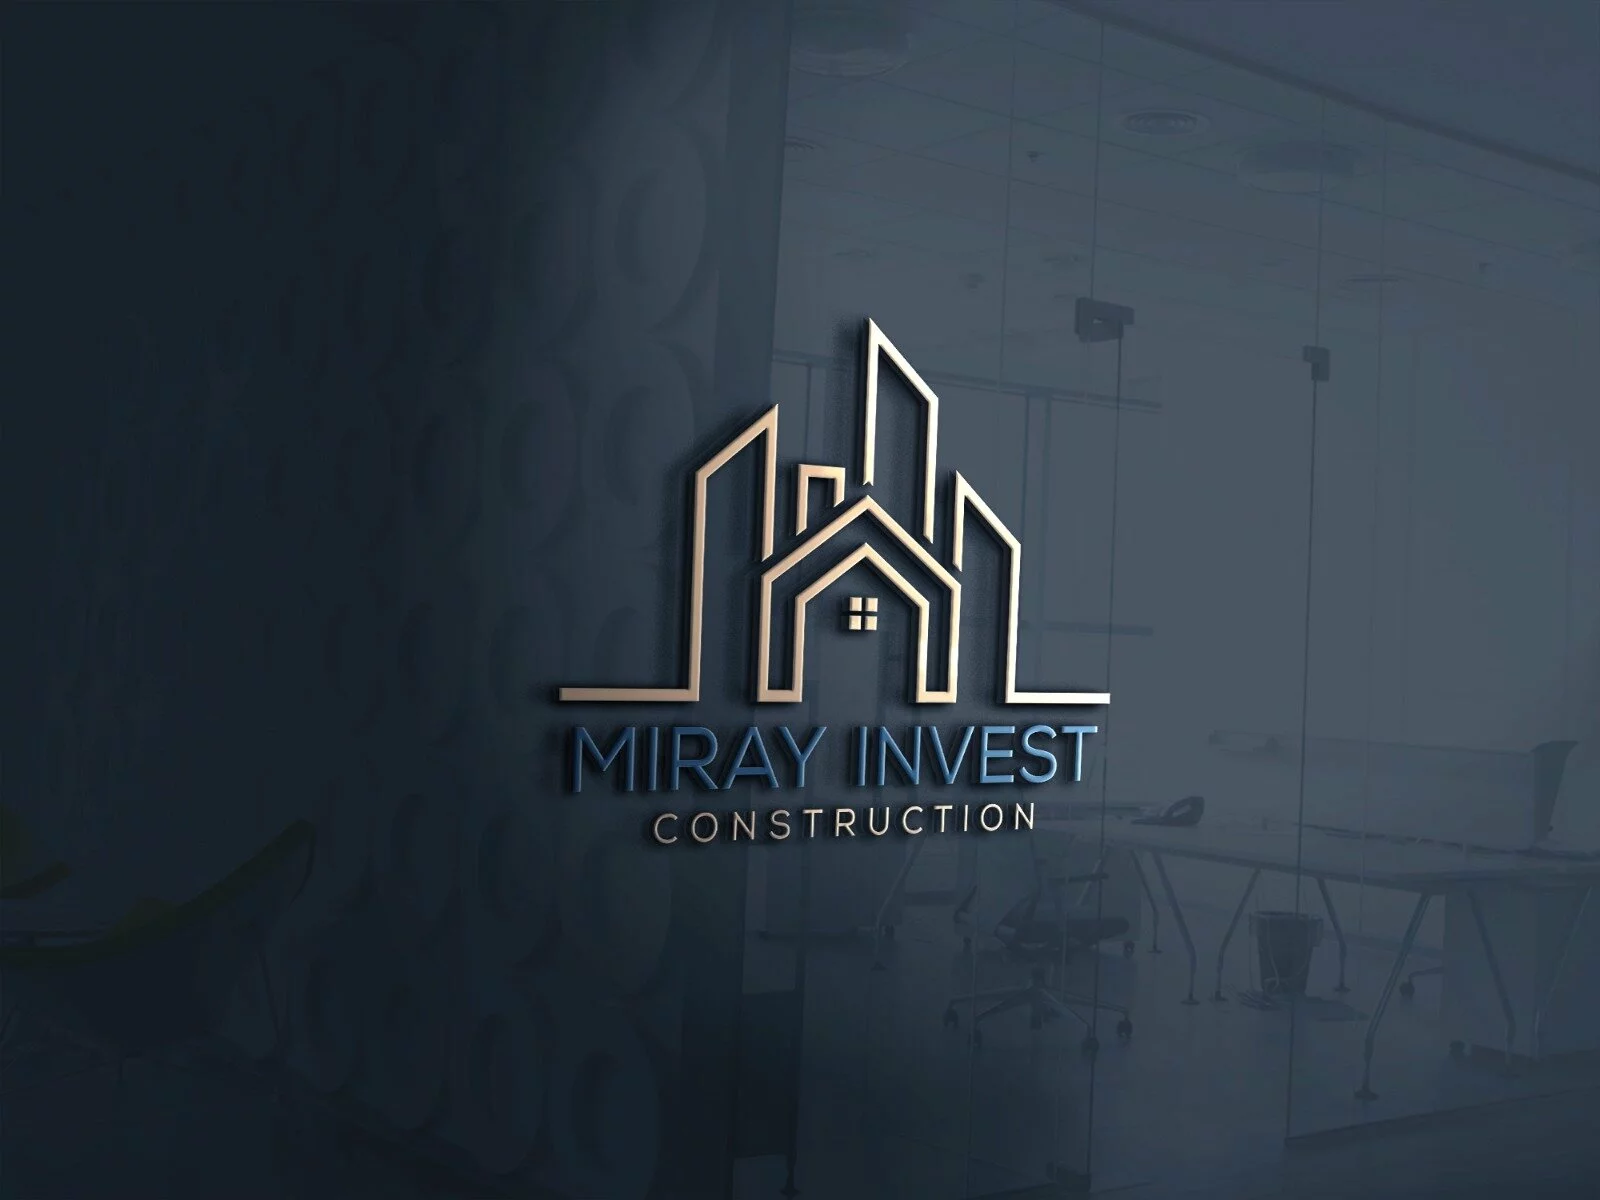 Miray Invest